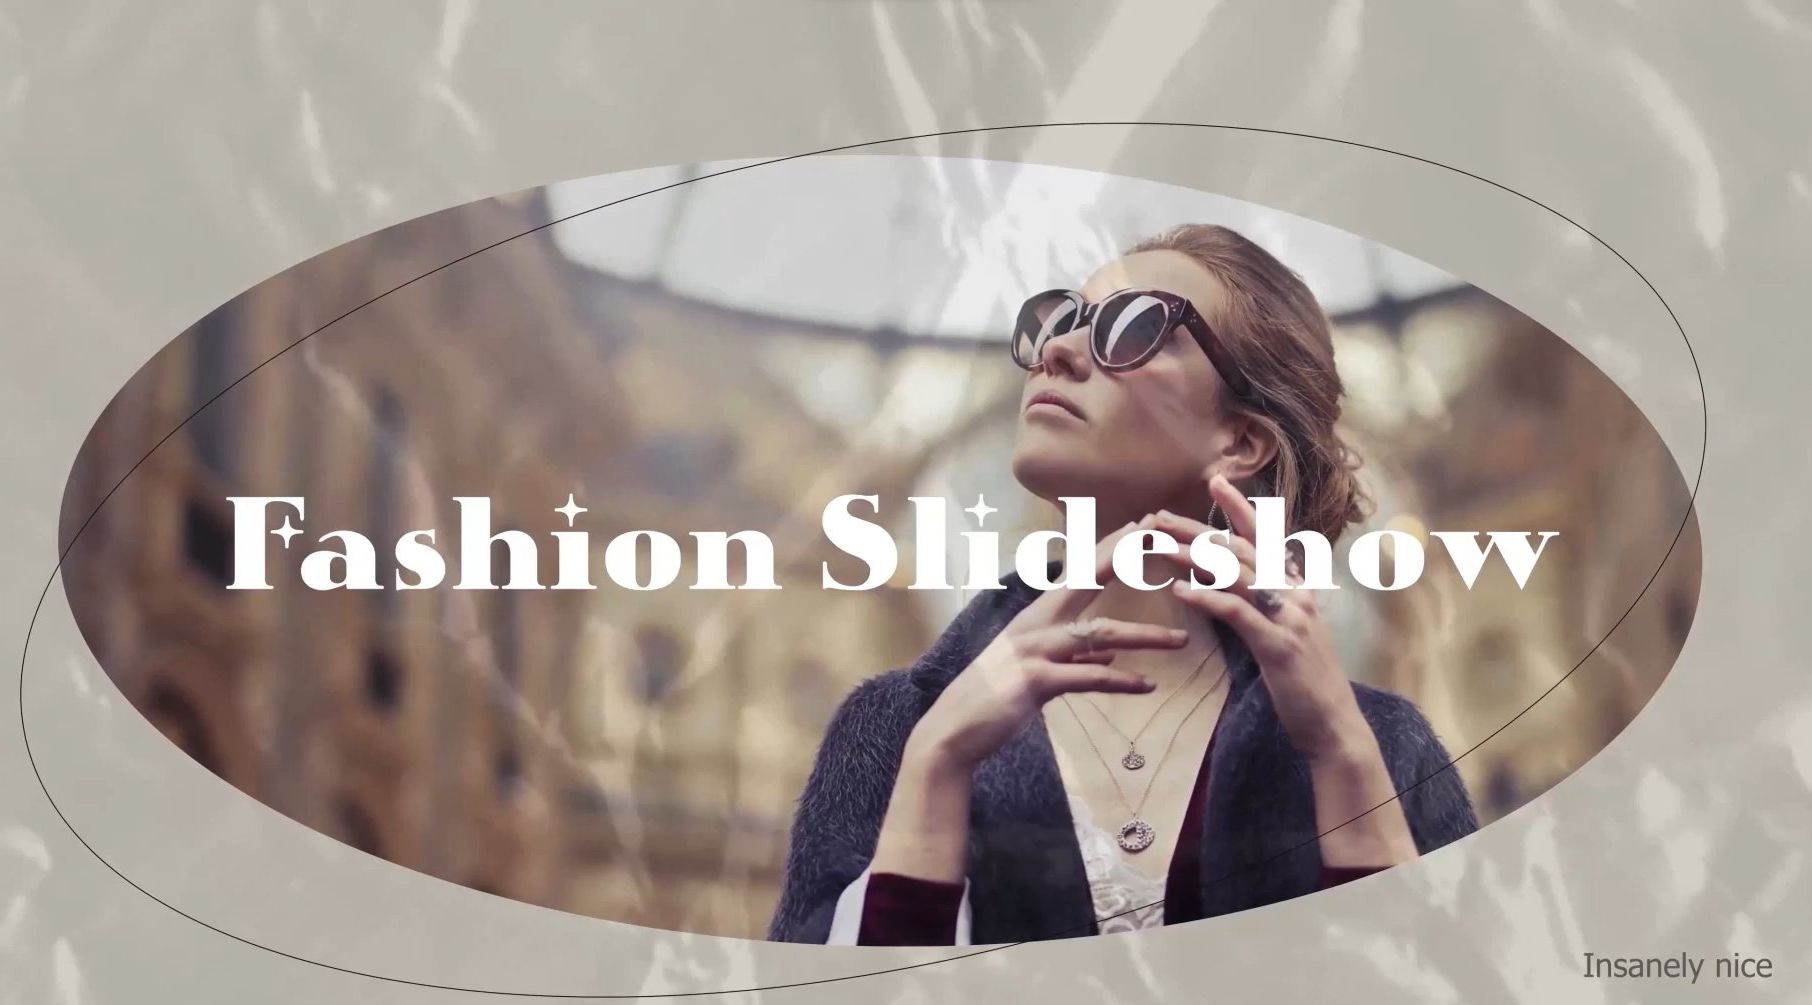 Fashion Slideshow DaVinci Resolve Template